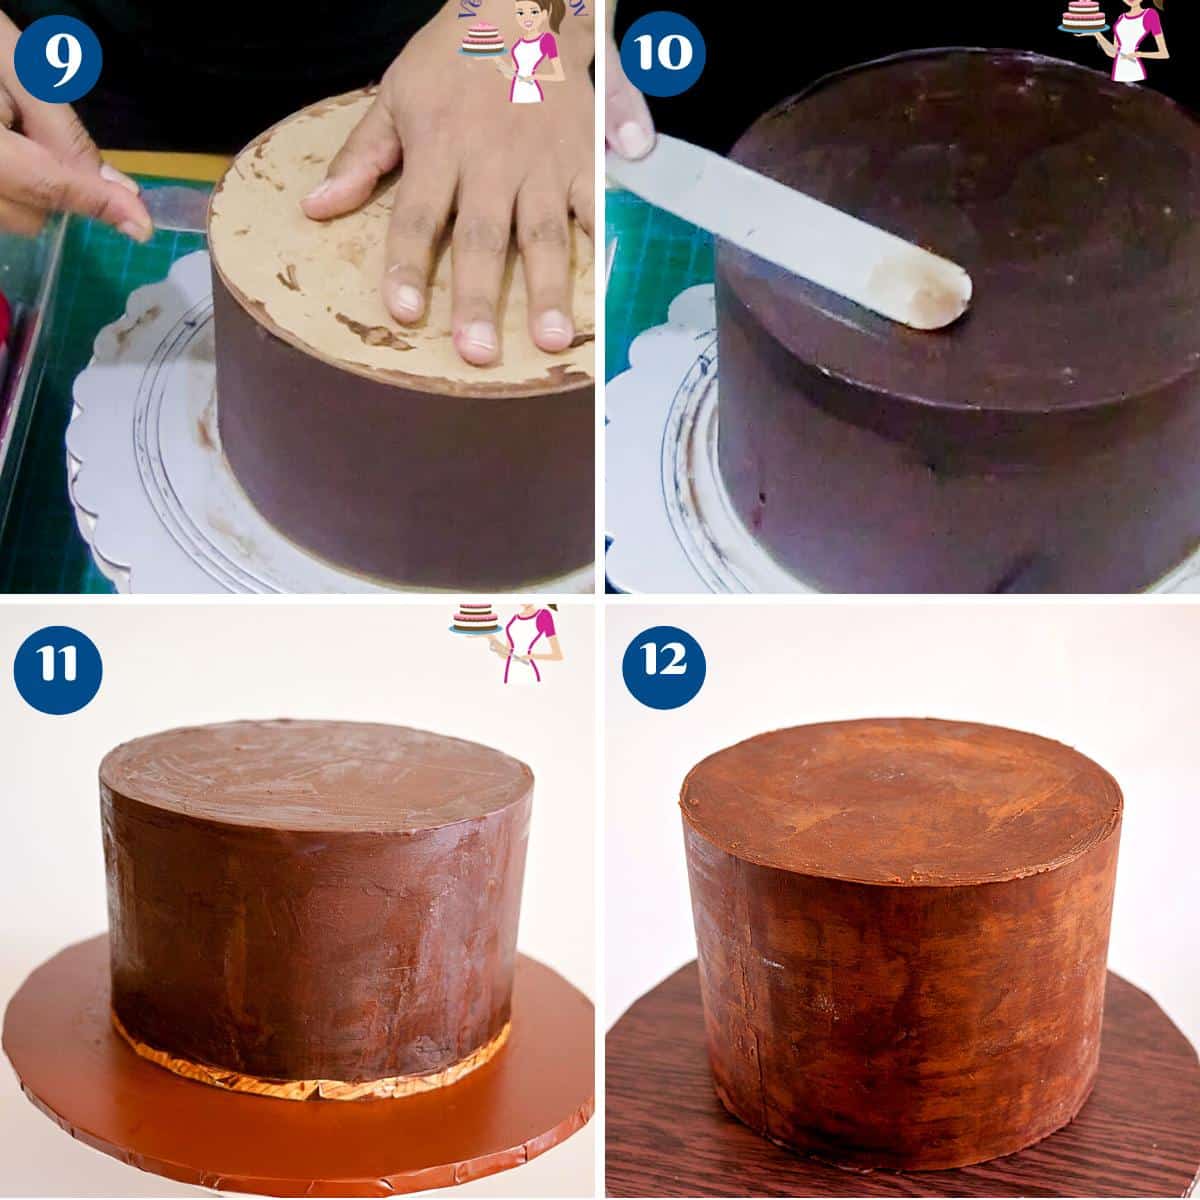 Progress pictures for ganache cake.